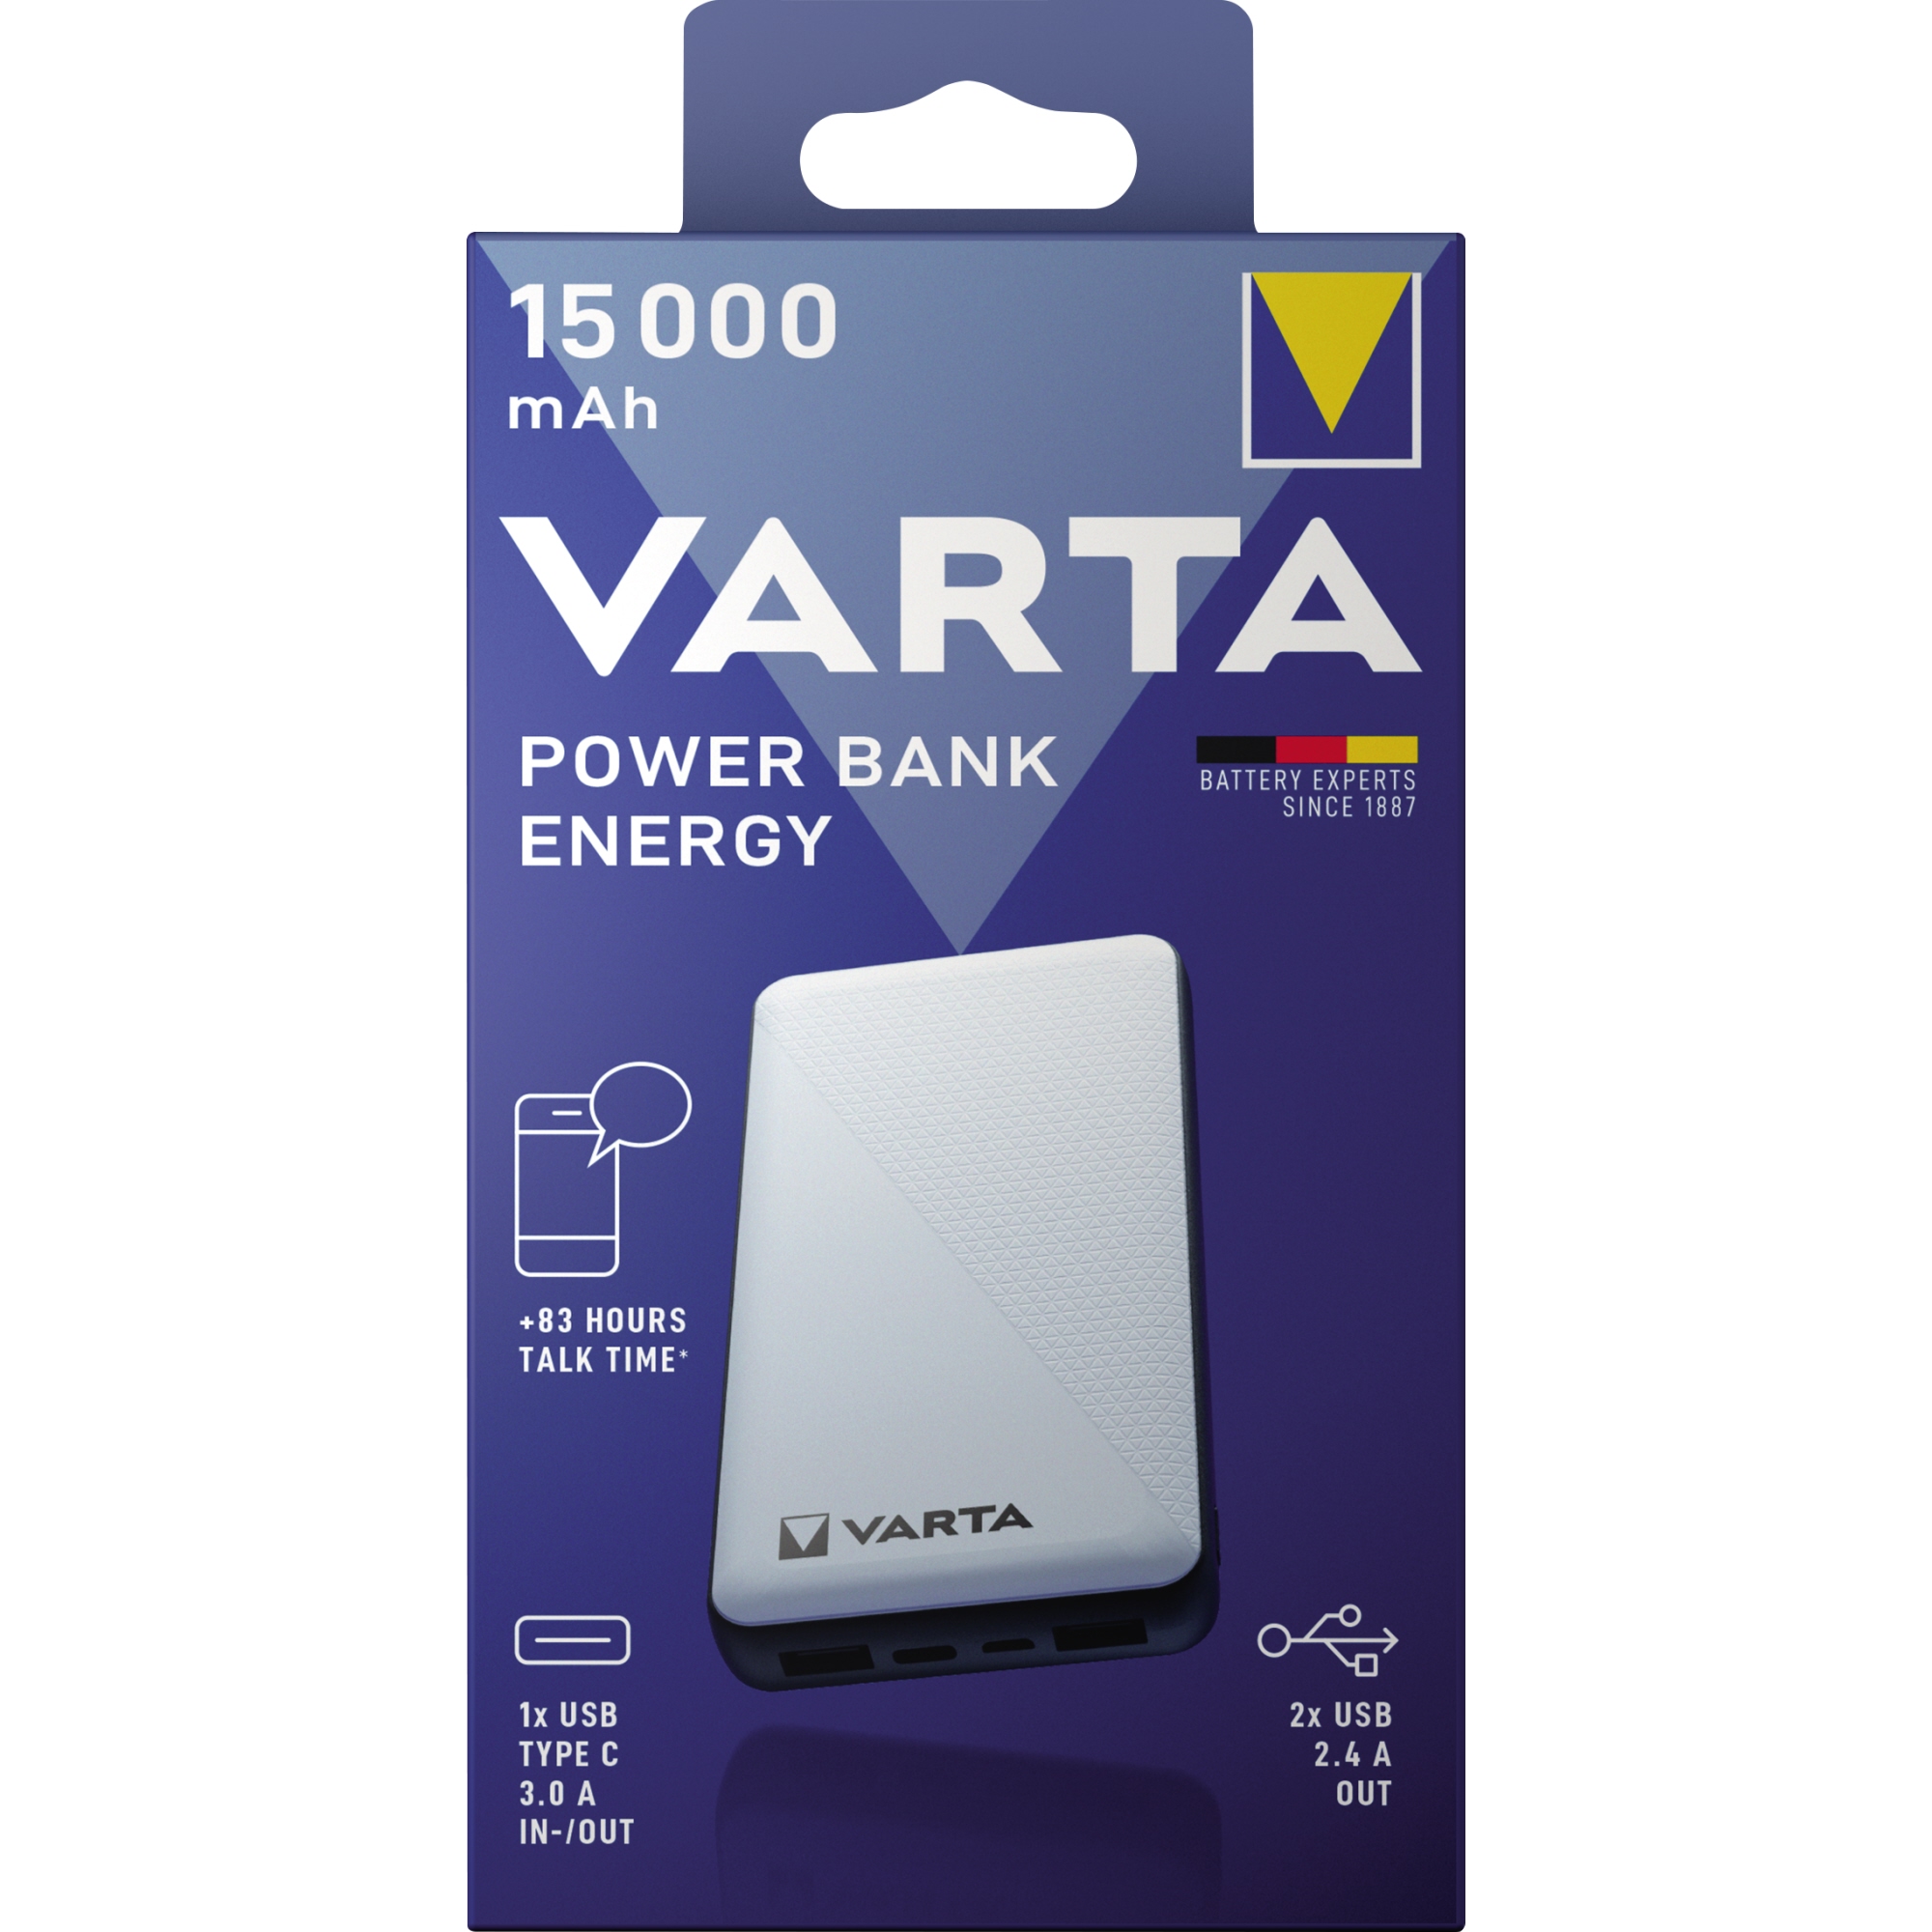 VARTA Powerbank Energy weiß 10000mAh 4USB-Ports Ladekabel 15.000 m